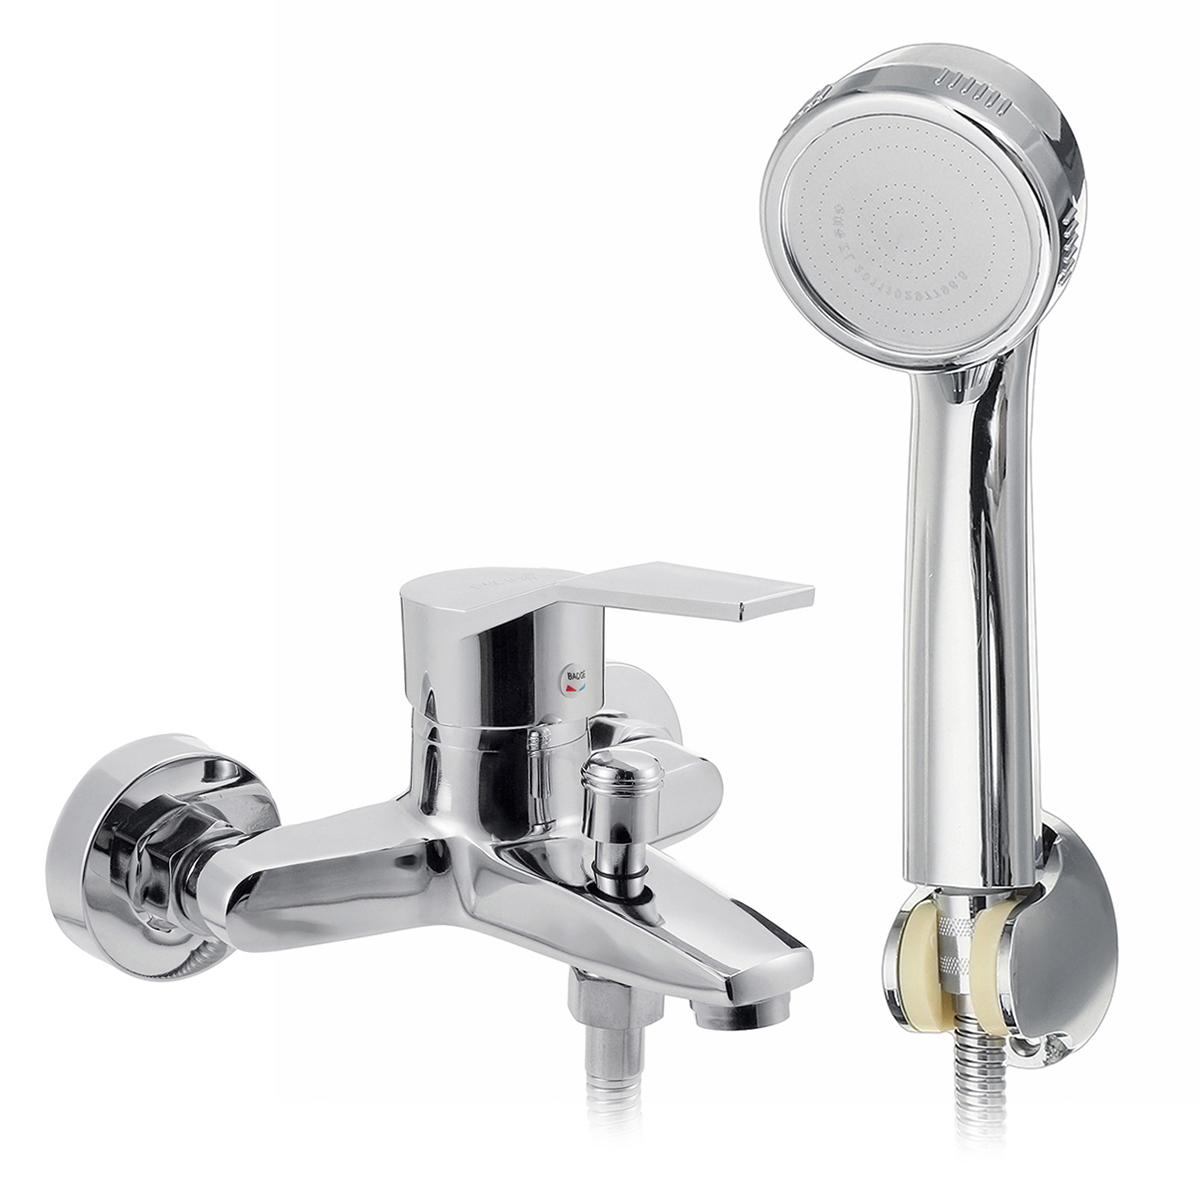 

Bathroom Kitchen Tub Shower Faucet Wall Mount Faucet Valve Mixer Tap Shower Head